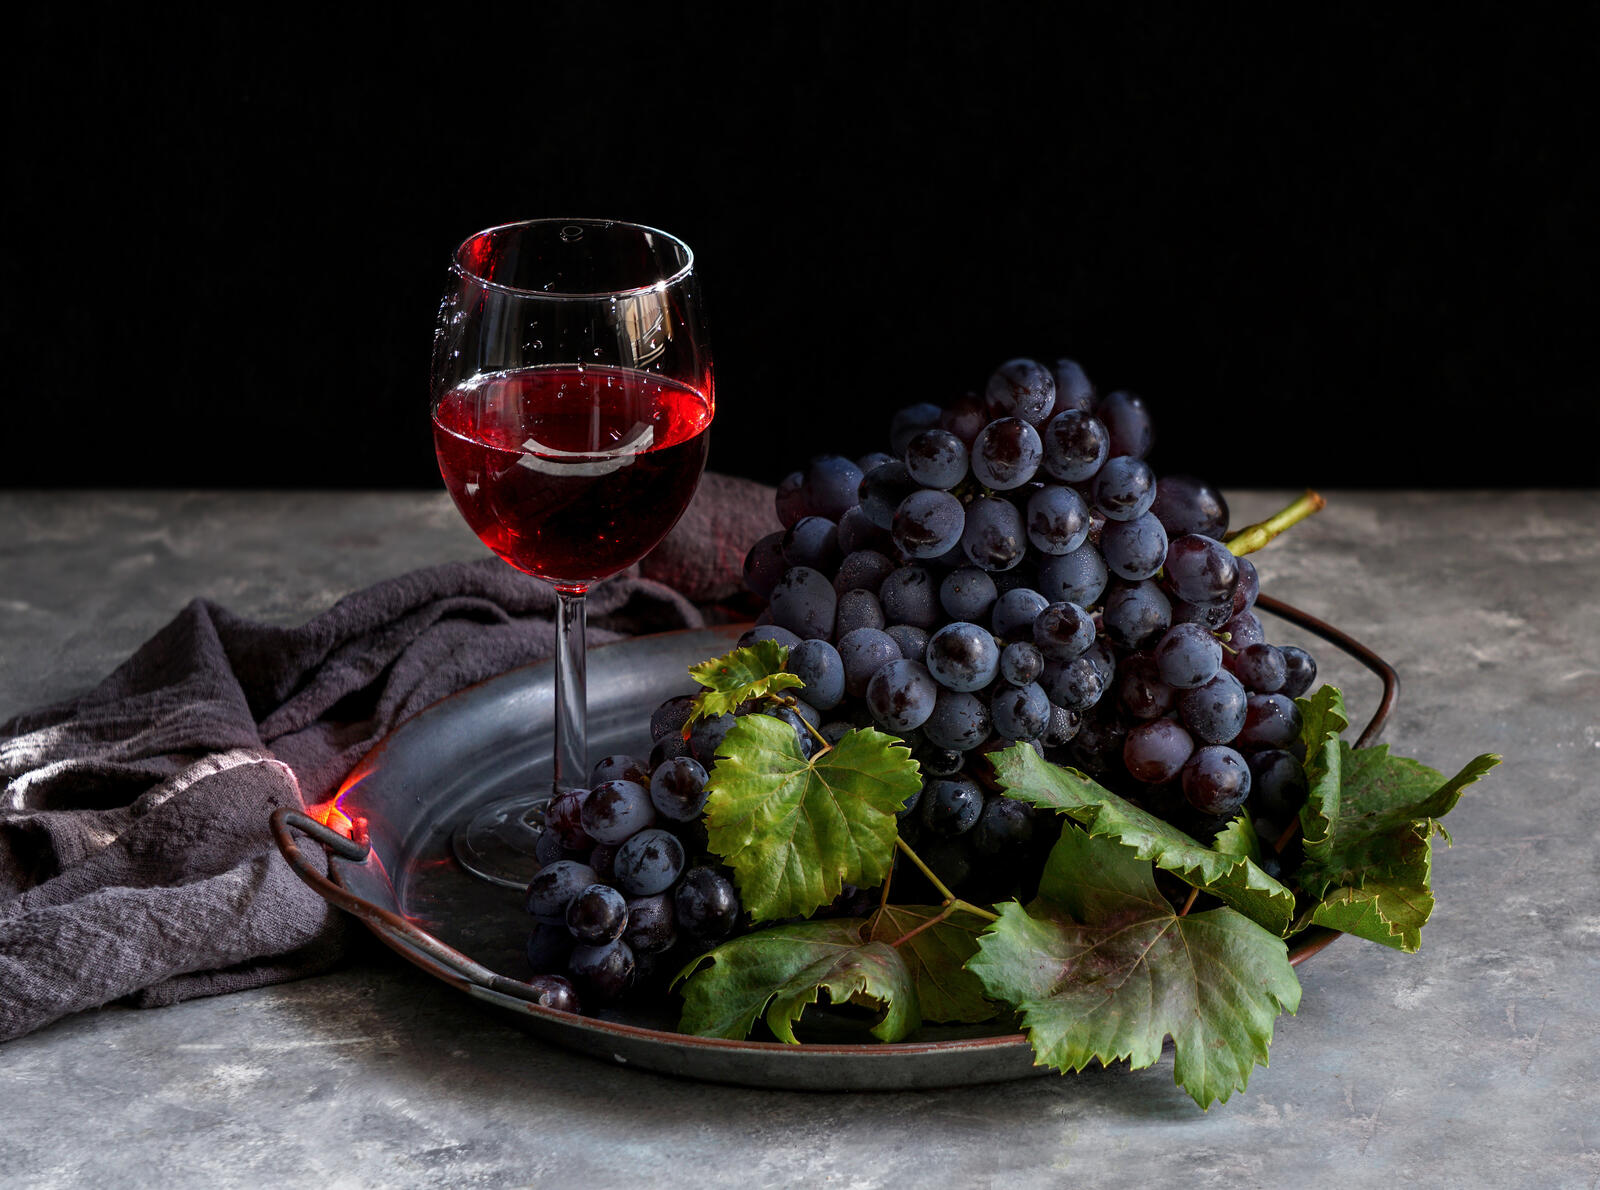 Бесплатное фото Бокал вина и гроздь винограда